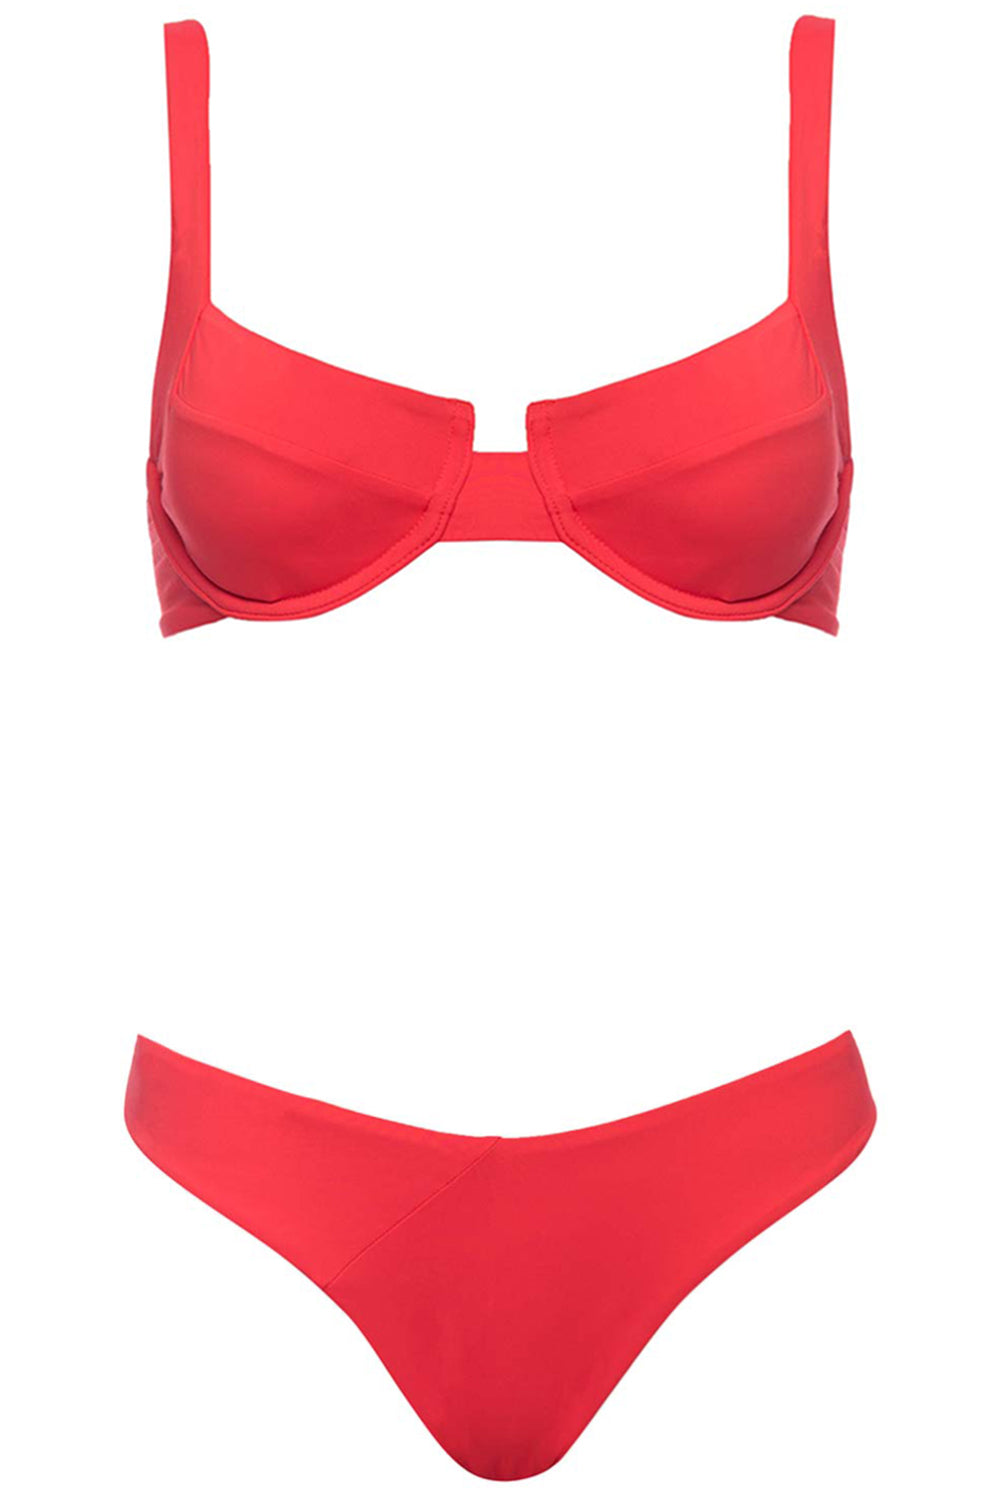 Laguna Bikini Red Set on white background front view.